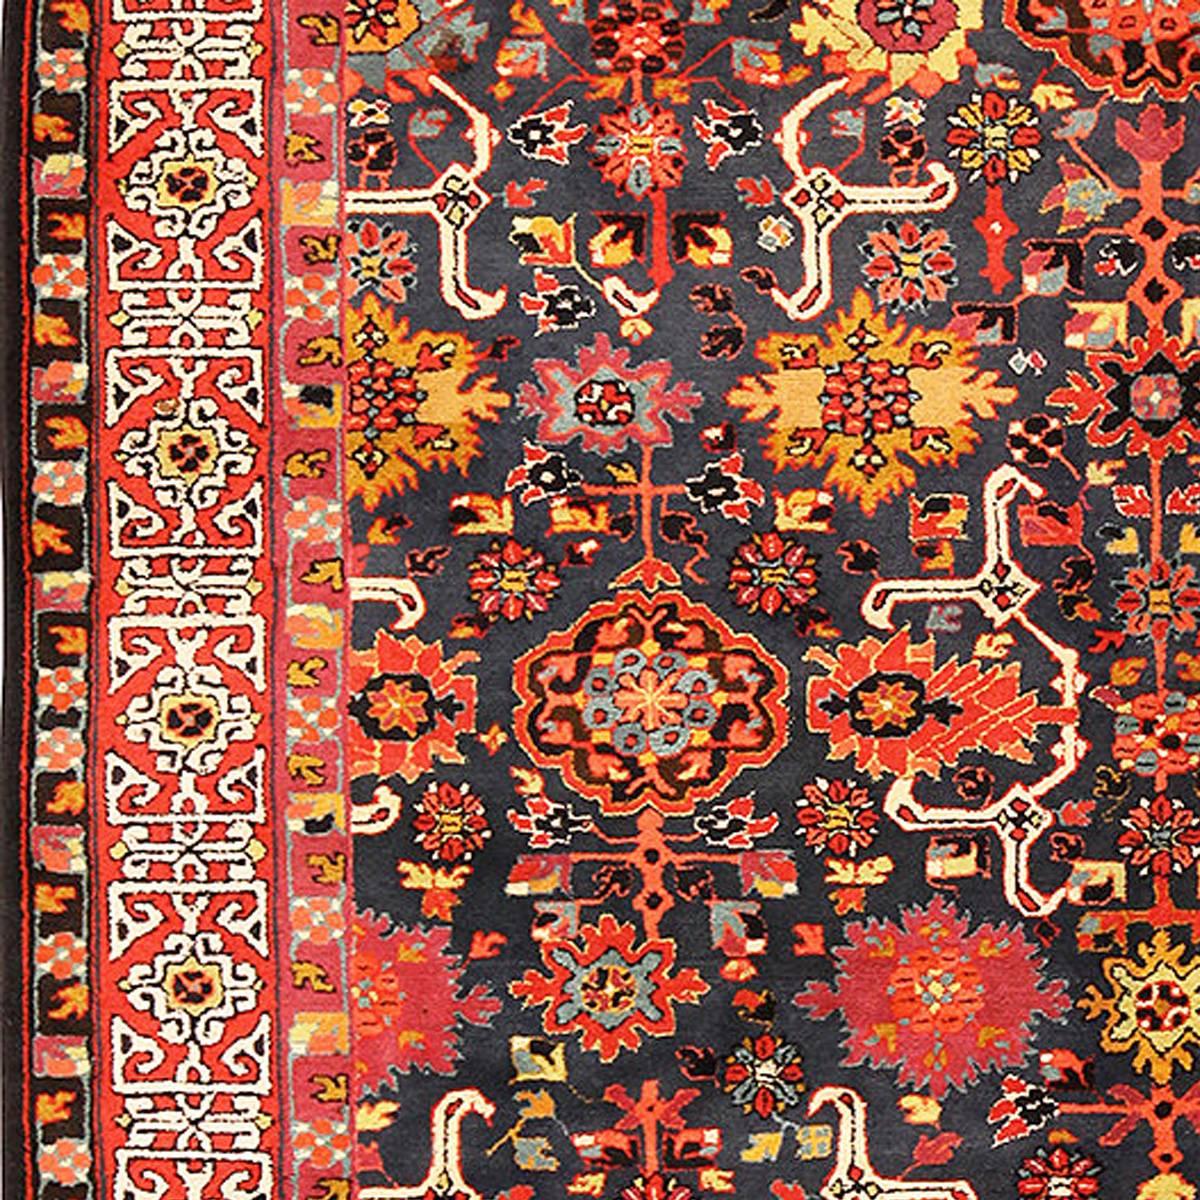 Hand-Knotted Kuba Design Vintage Tetex Carpet